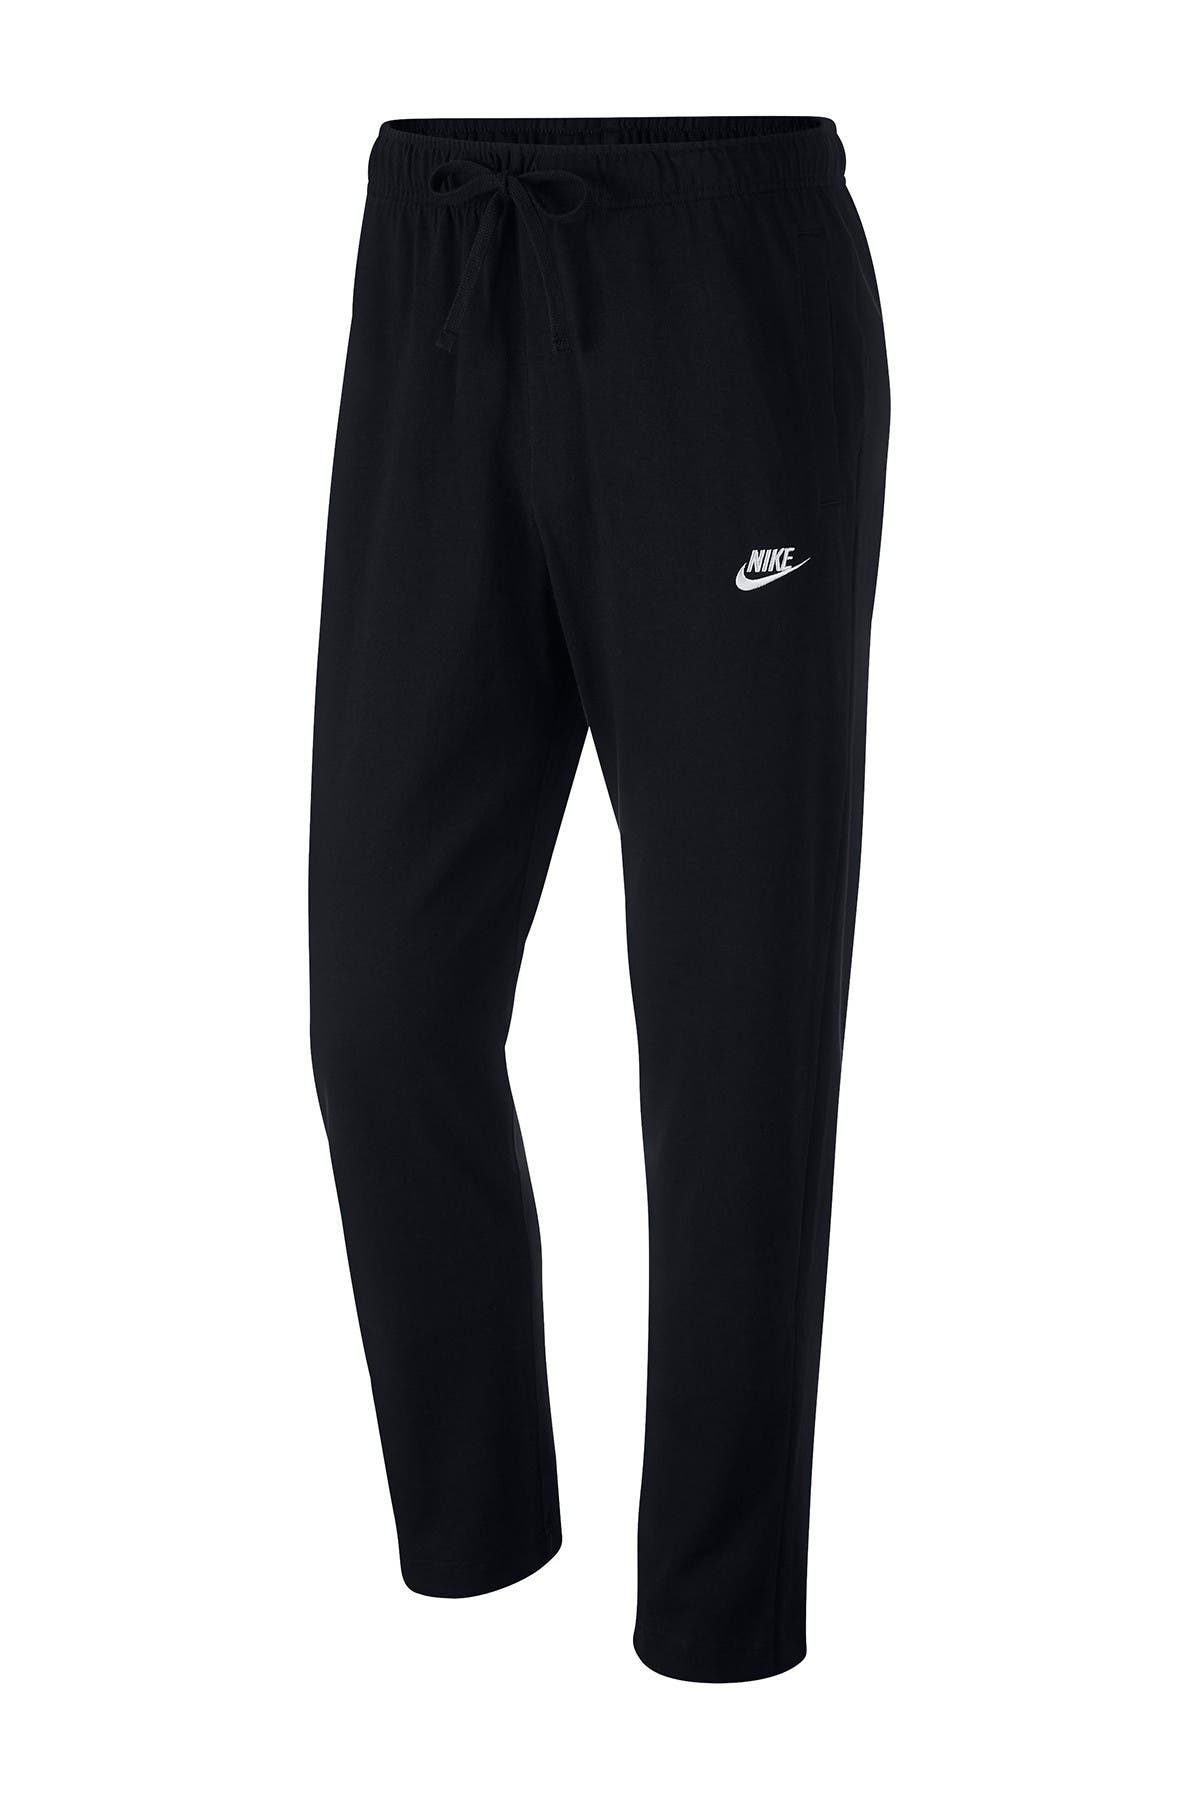 Men's Nike Pants | Nordstrom